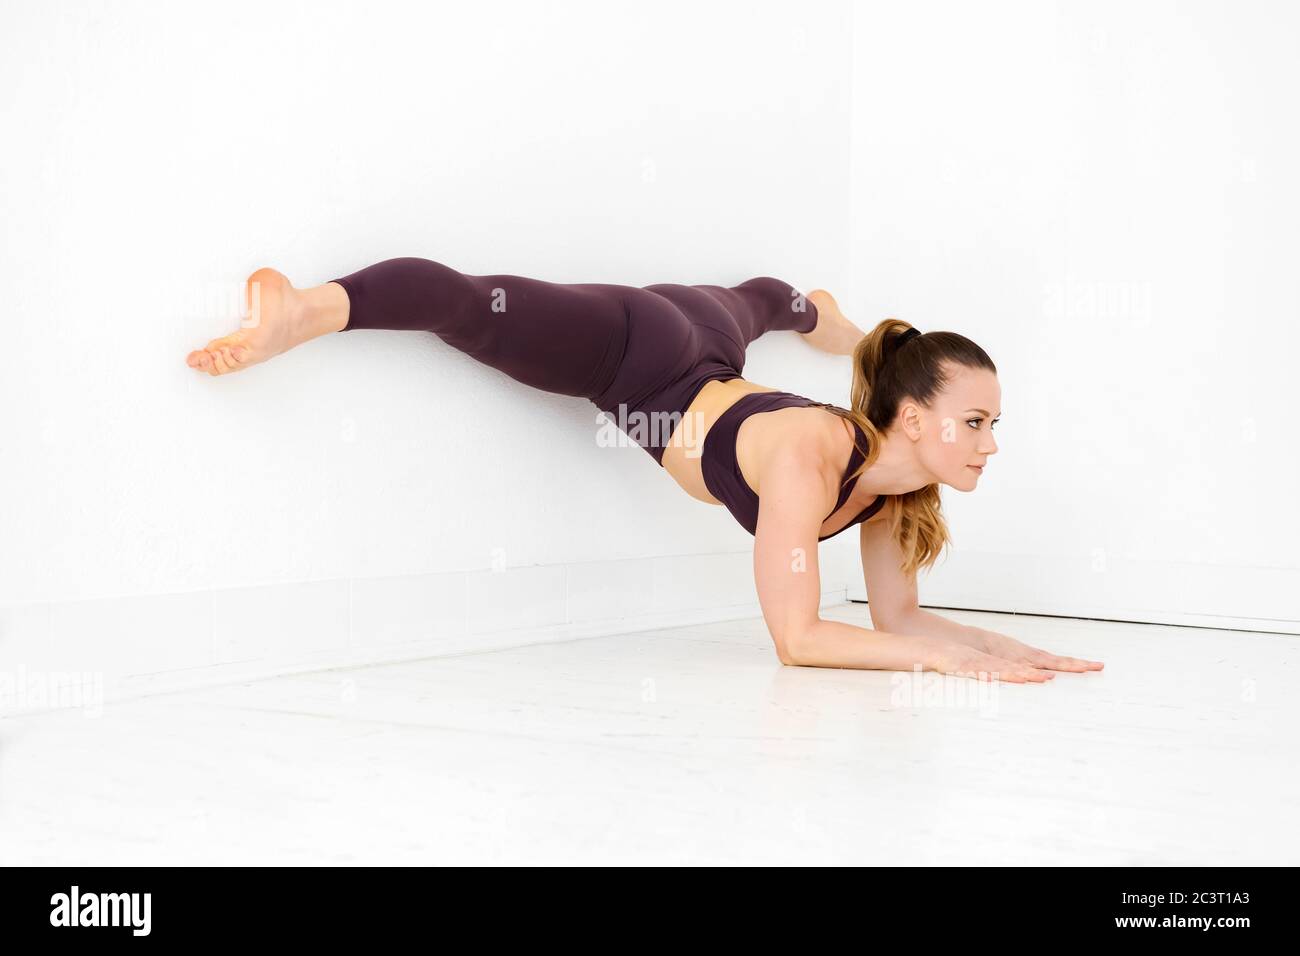 Woman doing yoga frontal split stretch Stock Photo by Photology75